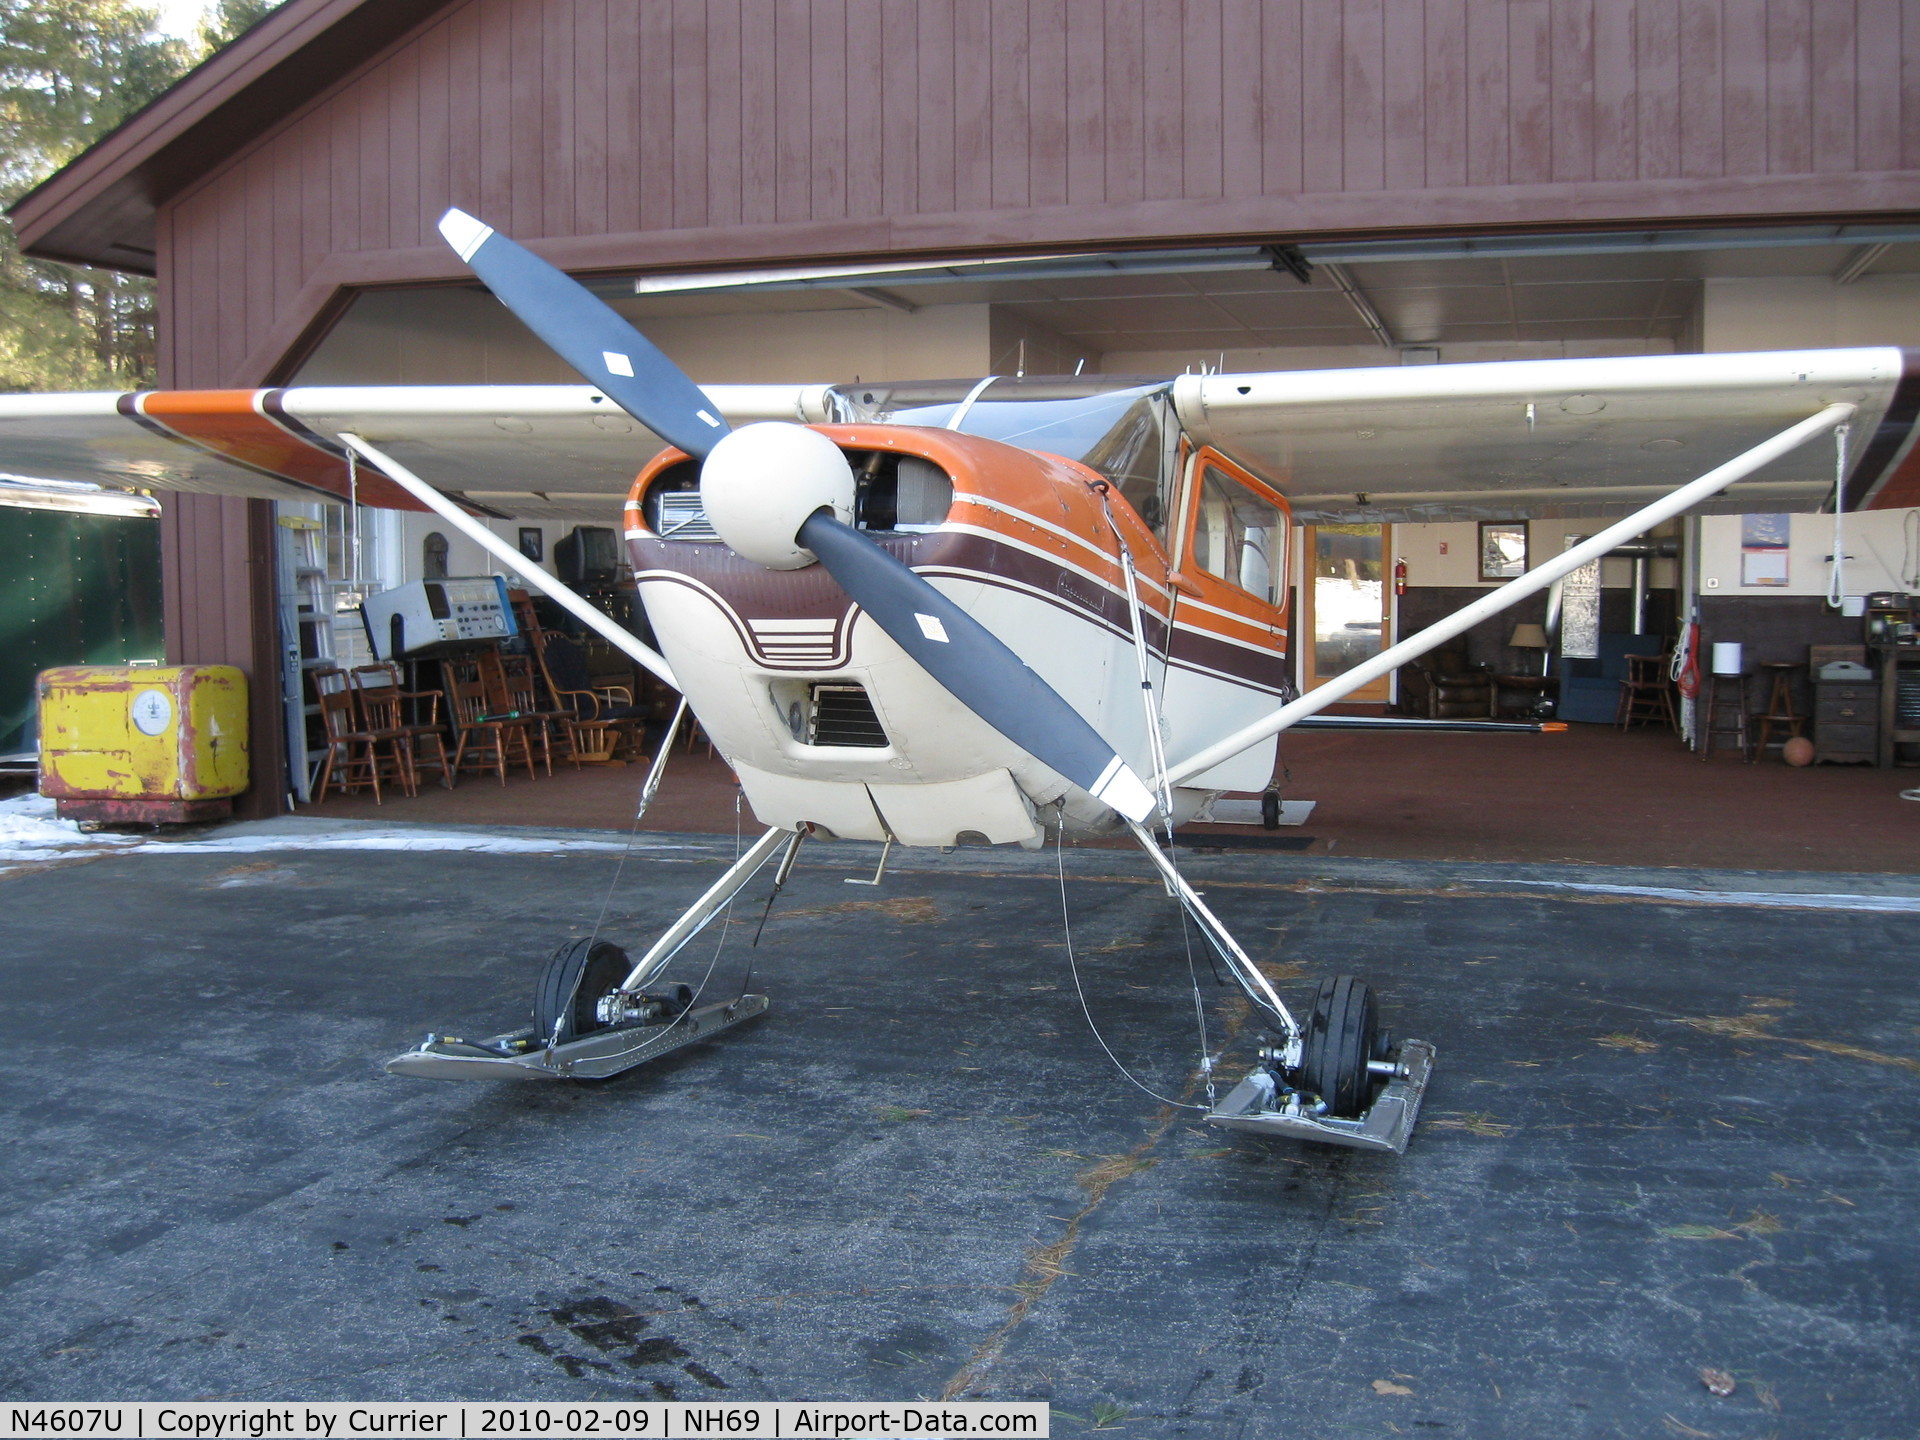 N4607U, Cessna 180 C/N 30251, Fitted with wheel skiis.